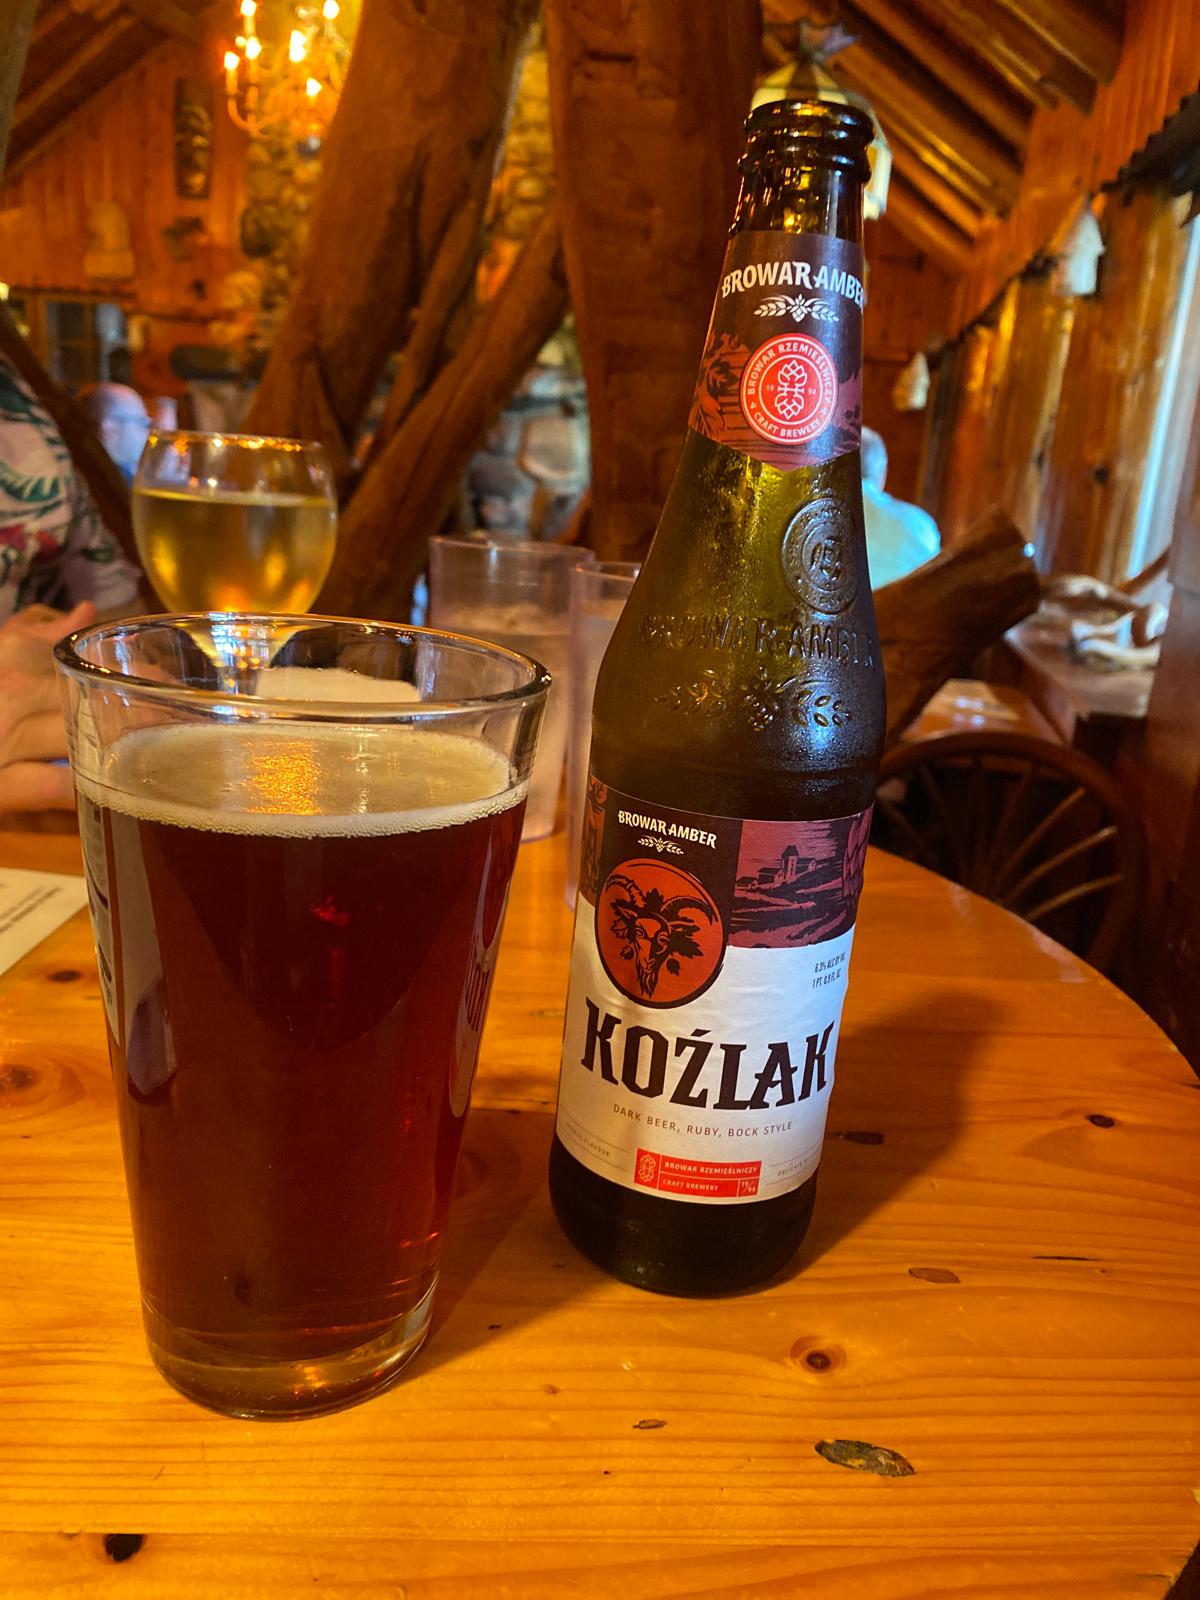 Kozlak Bock Beer